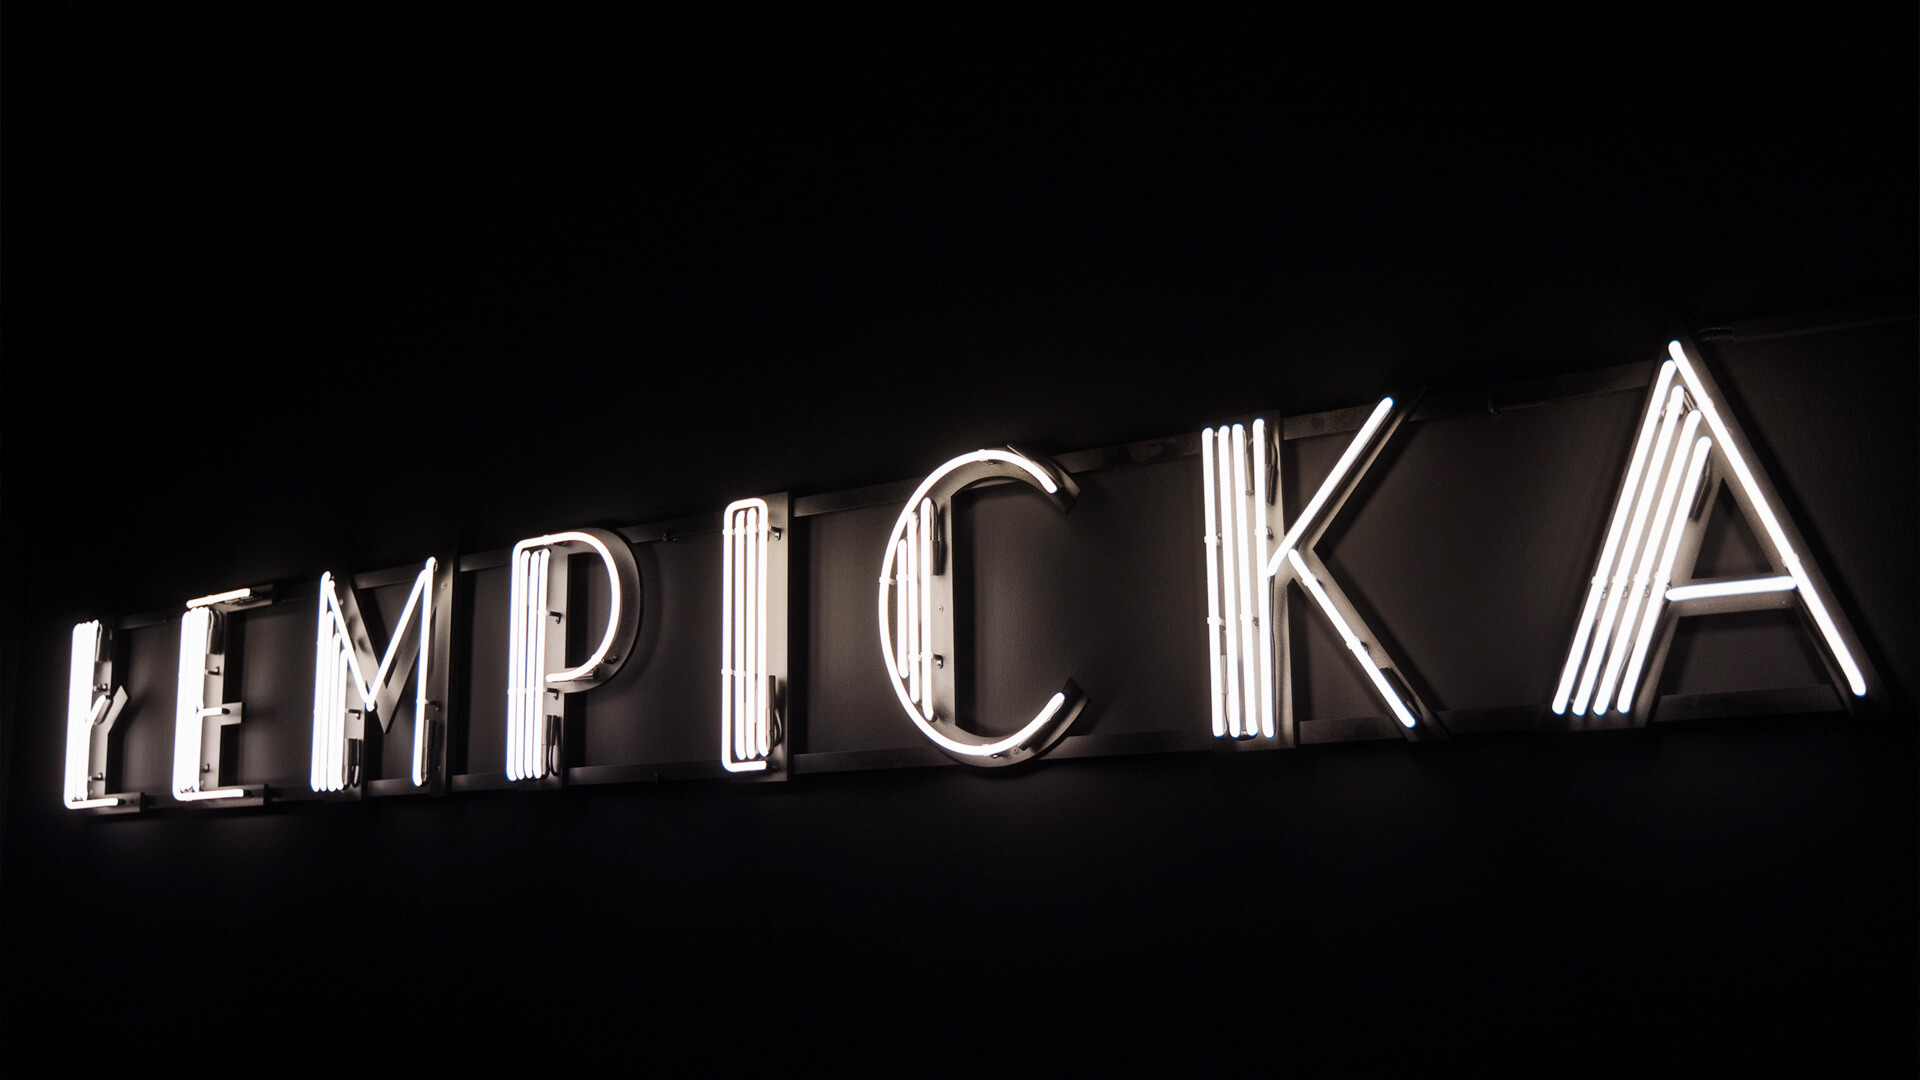 Neon Tamara Lempicka - Exhibition with neon sign in the museum in Krakow